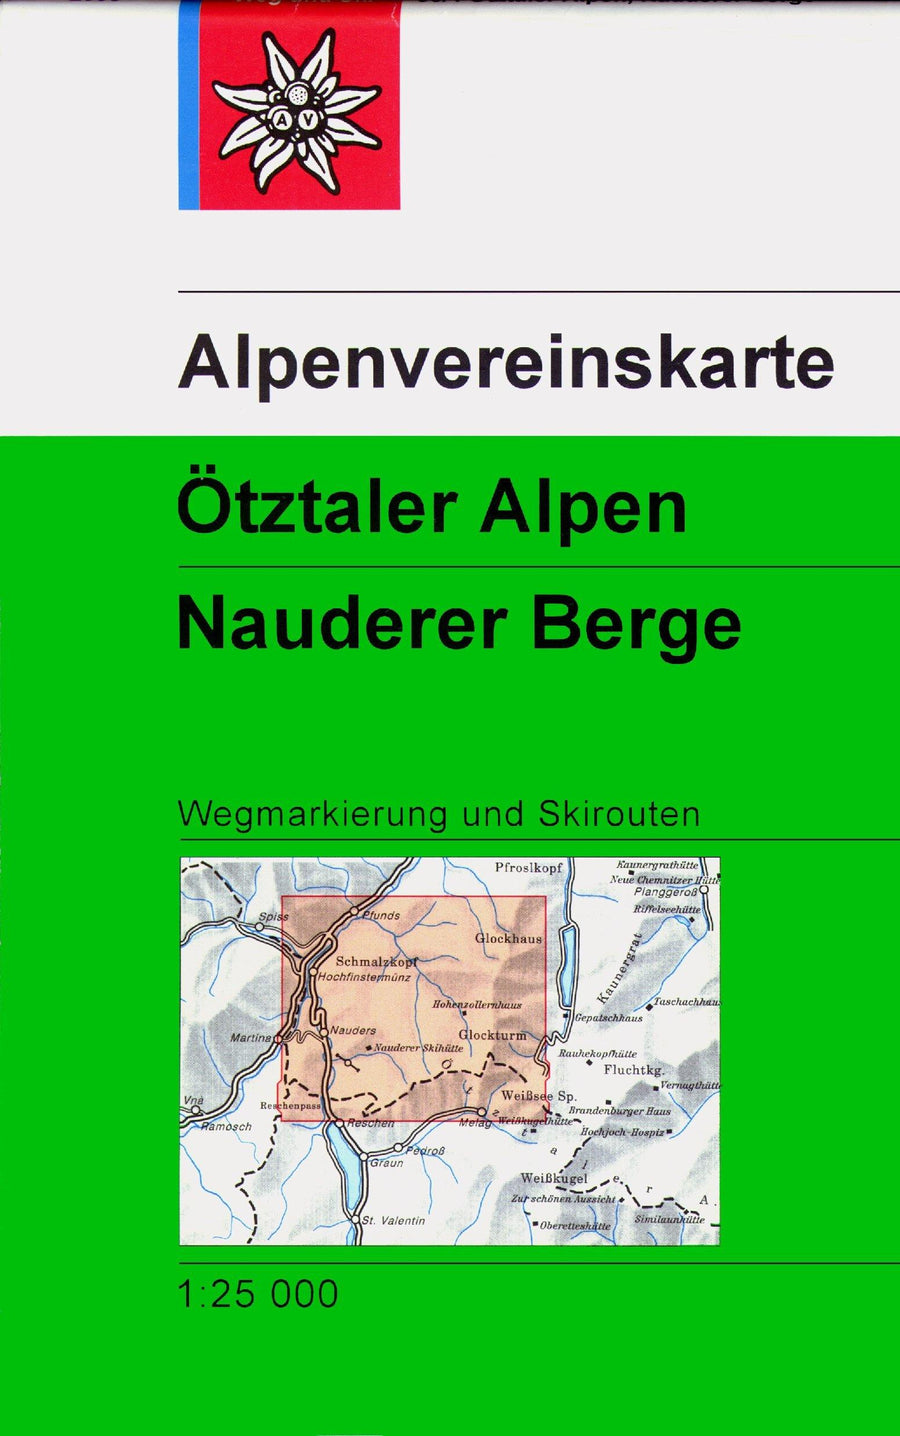 Carte de randonnée - Ötztaler Alpen Nauderer Berge, n° 30/4 (Alpes autrichiennes) | Alpenverein carte pliée Alpenverein 